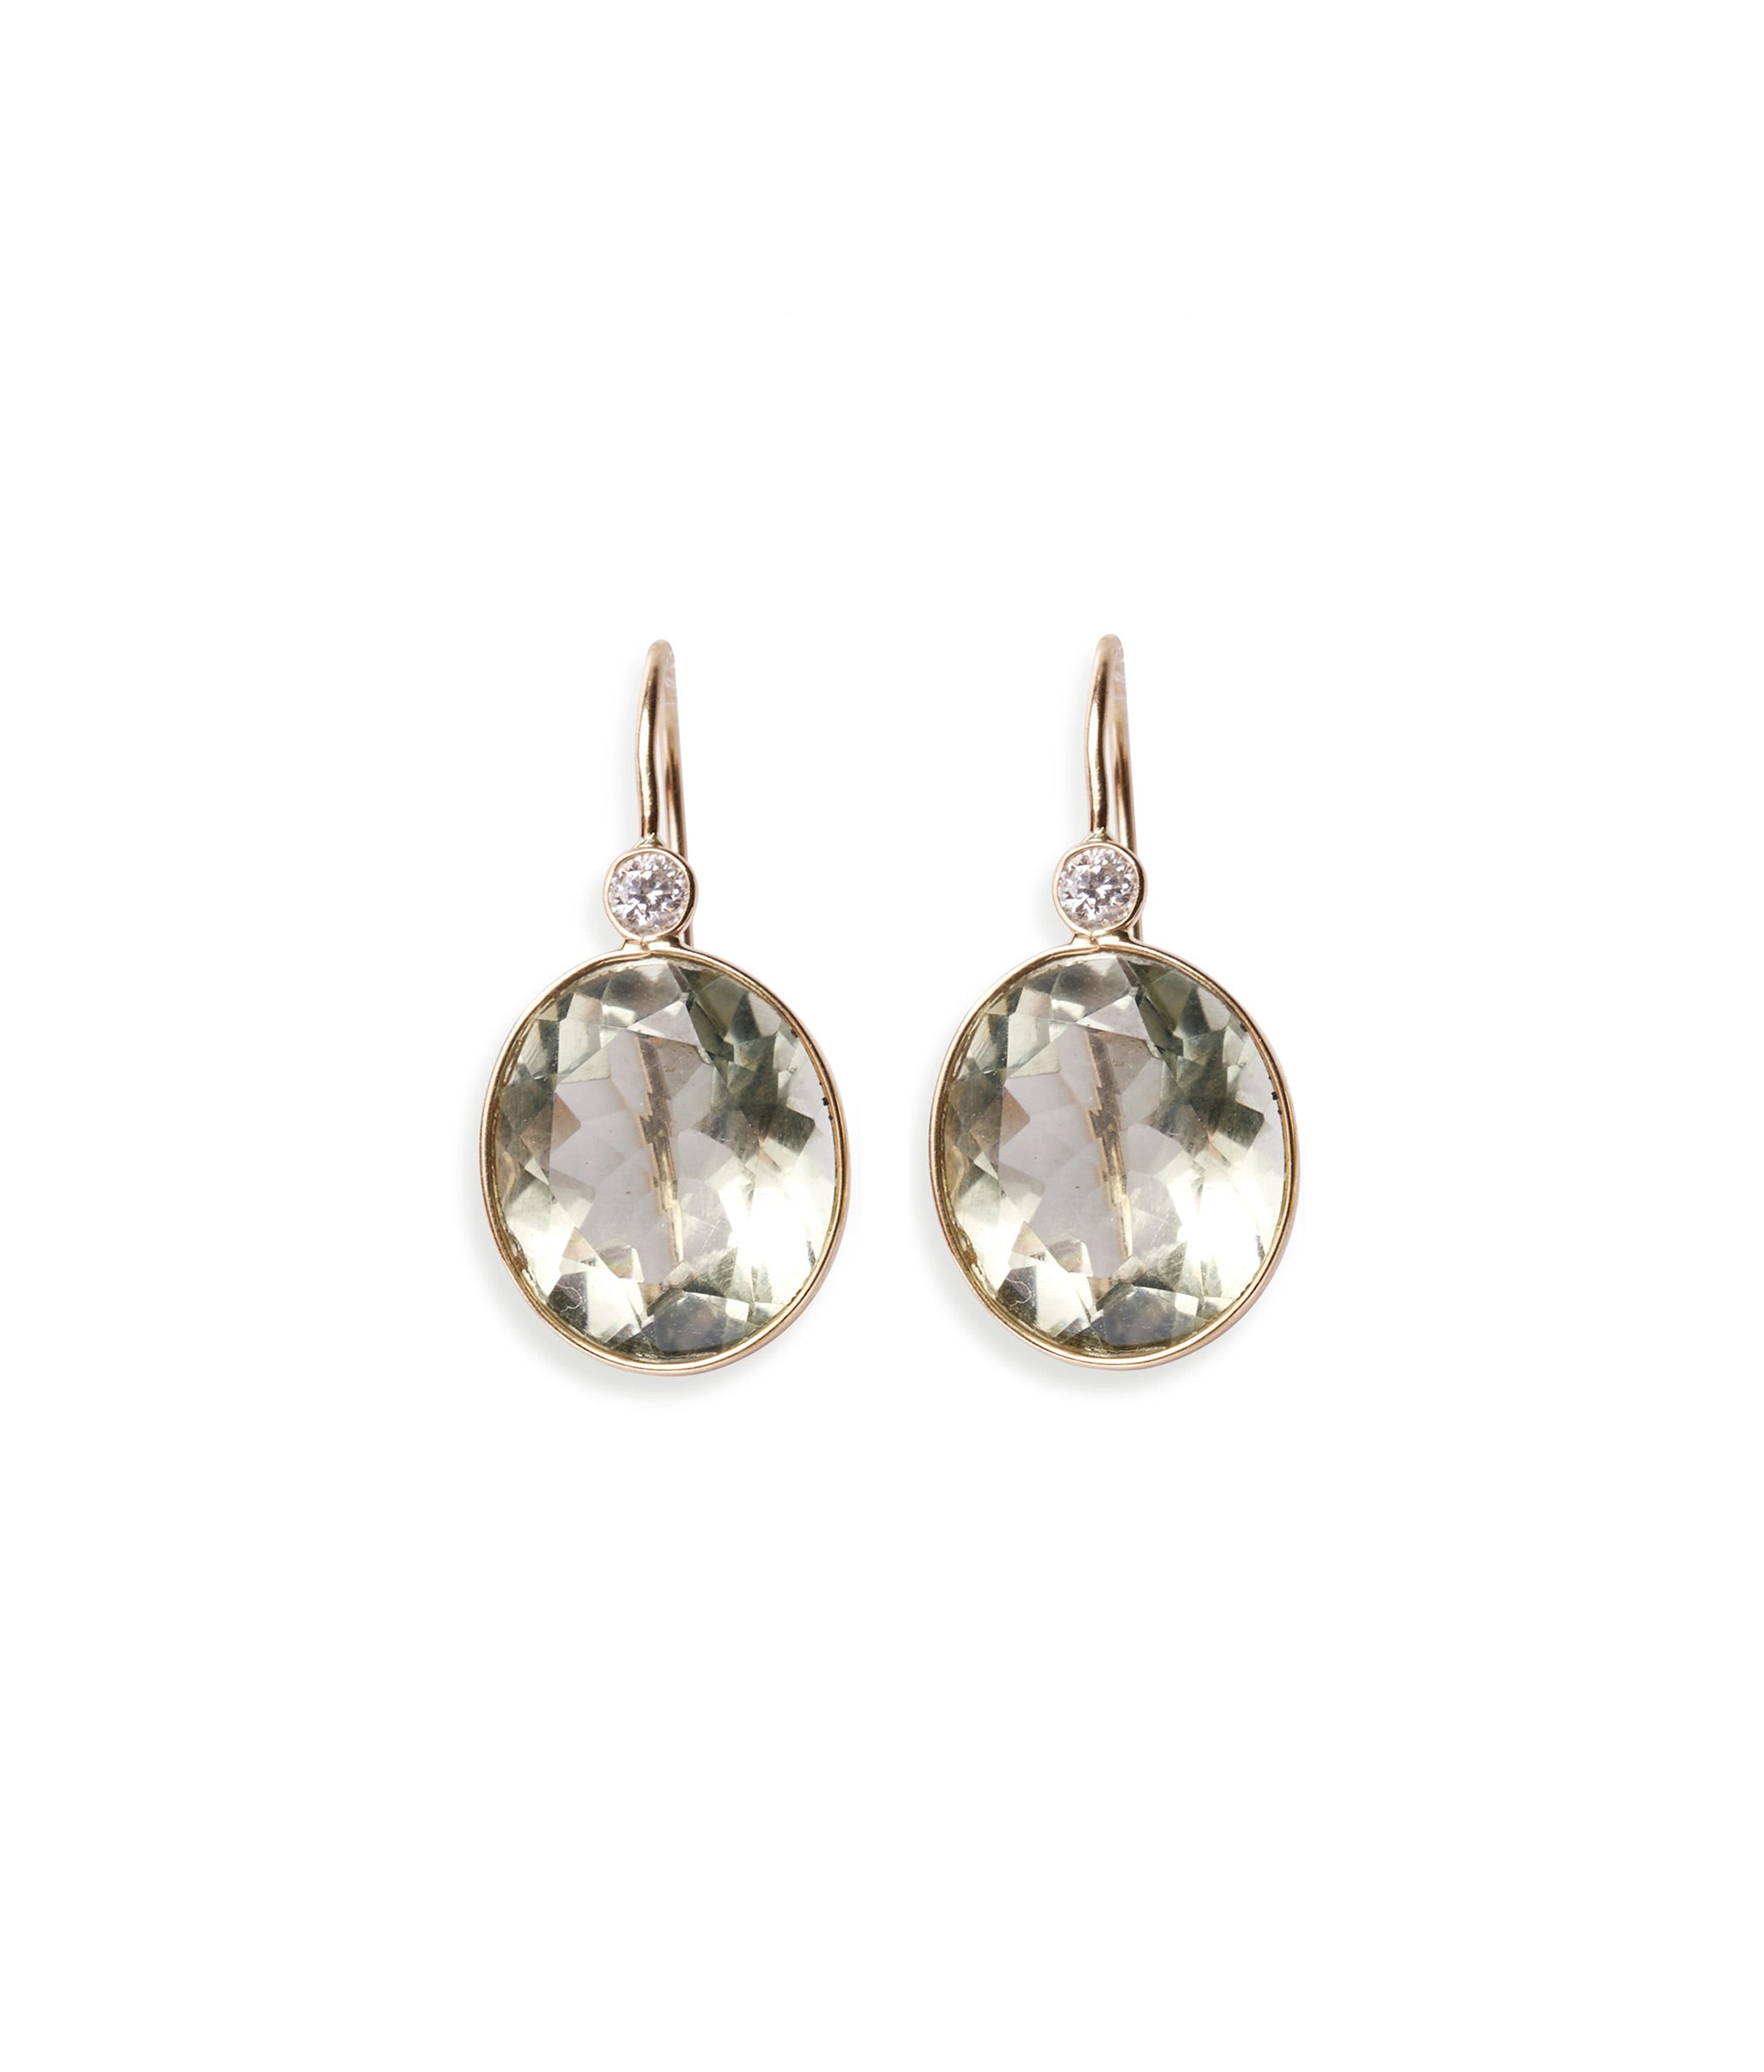 Pool Earrings in Green Amethyst & Diamond. Faceted green amethyst oval earrings with 14k gold bezels and diamond detail.